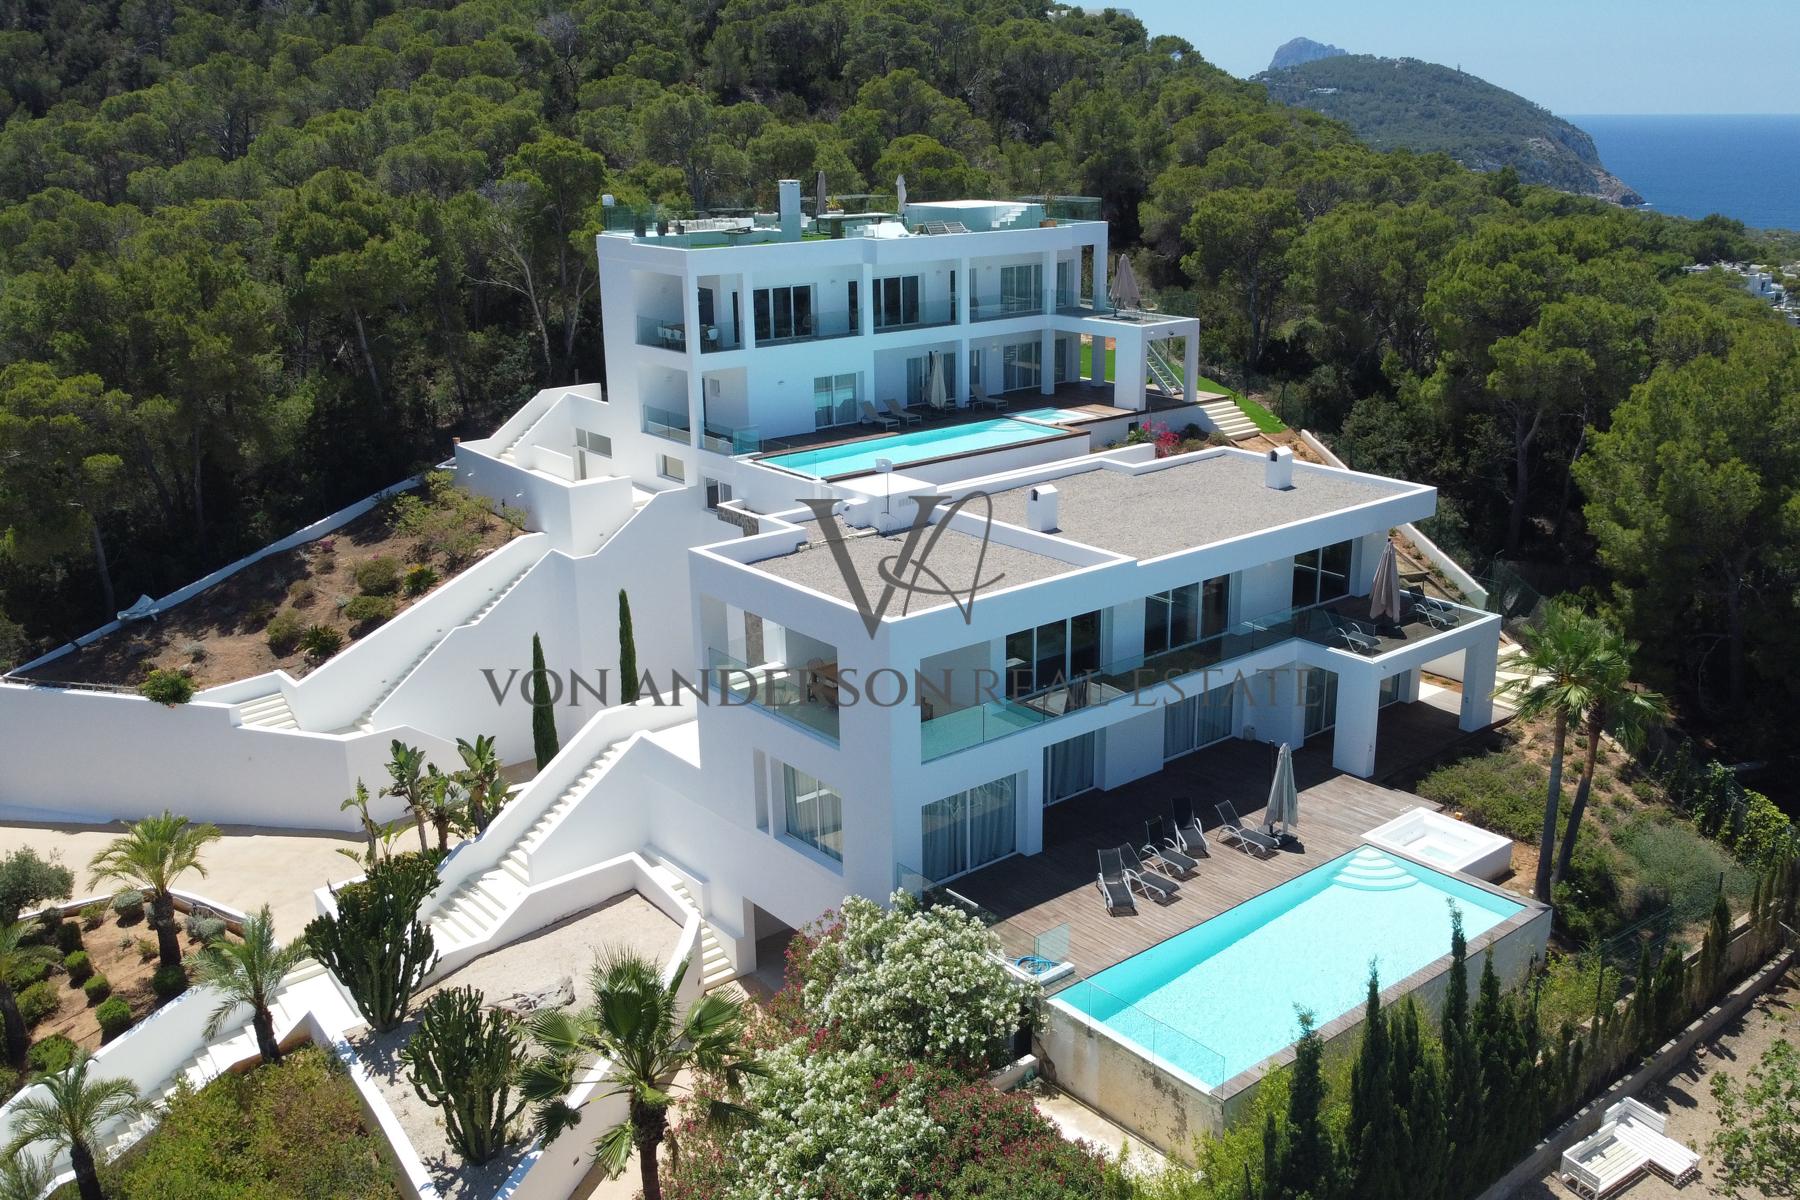 Two Magnificent Luxury Villas with Amazing Views & Tourist Licenses, ref. VA1003, for sale in Ibiza by Von Anderson Real Estate